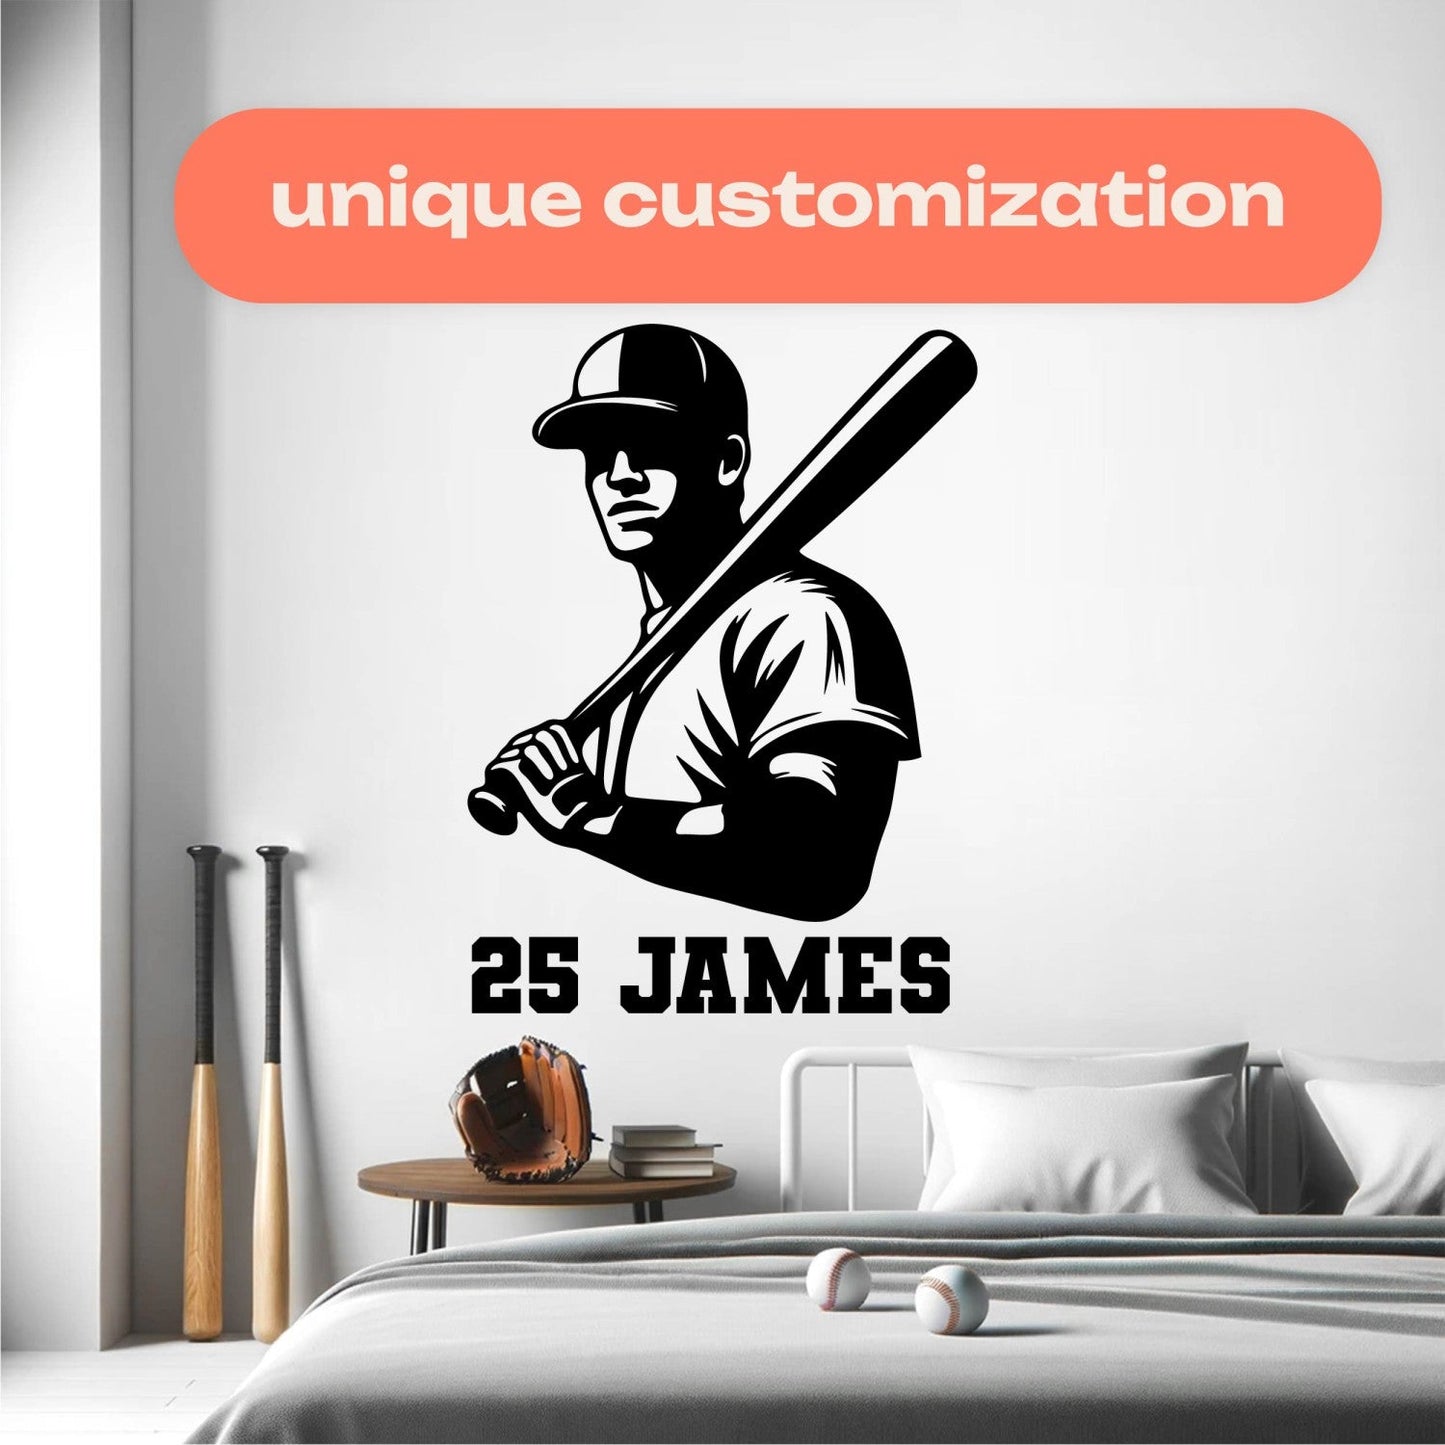 Baseball Wall Decals Personalized - Baseball Player Name Sticker for Walls - Custom Baseball Name Decal - Personalized Baseball Decal for Boys Room